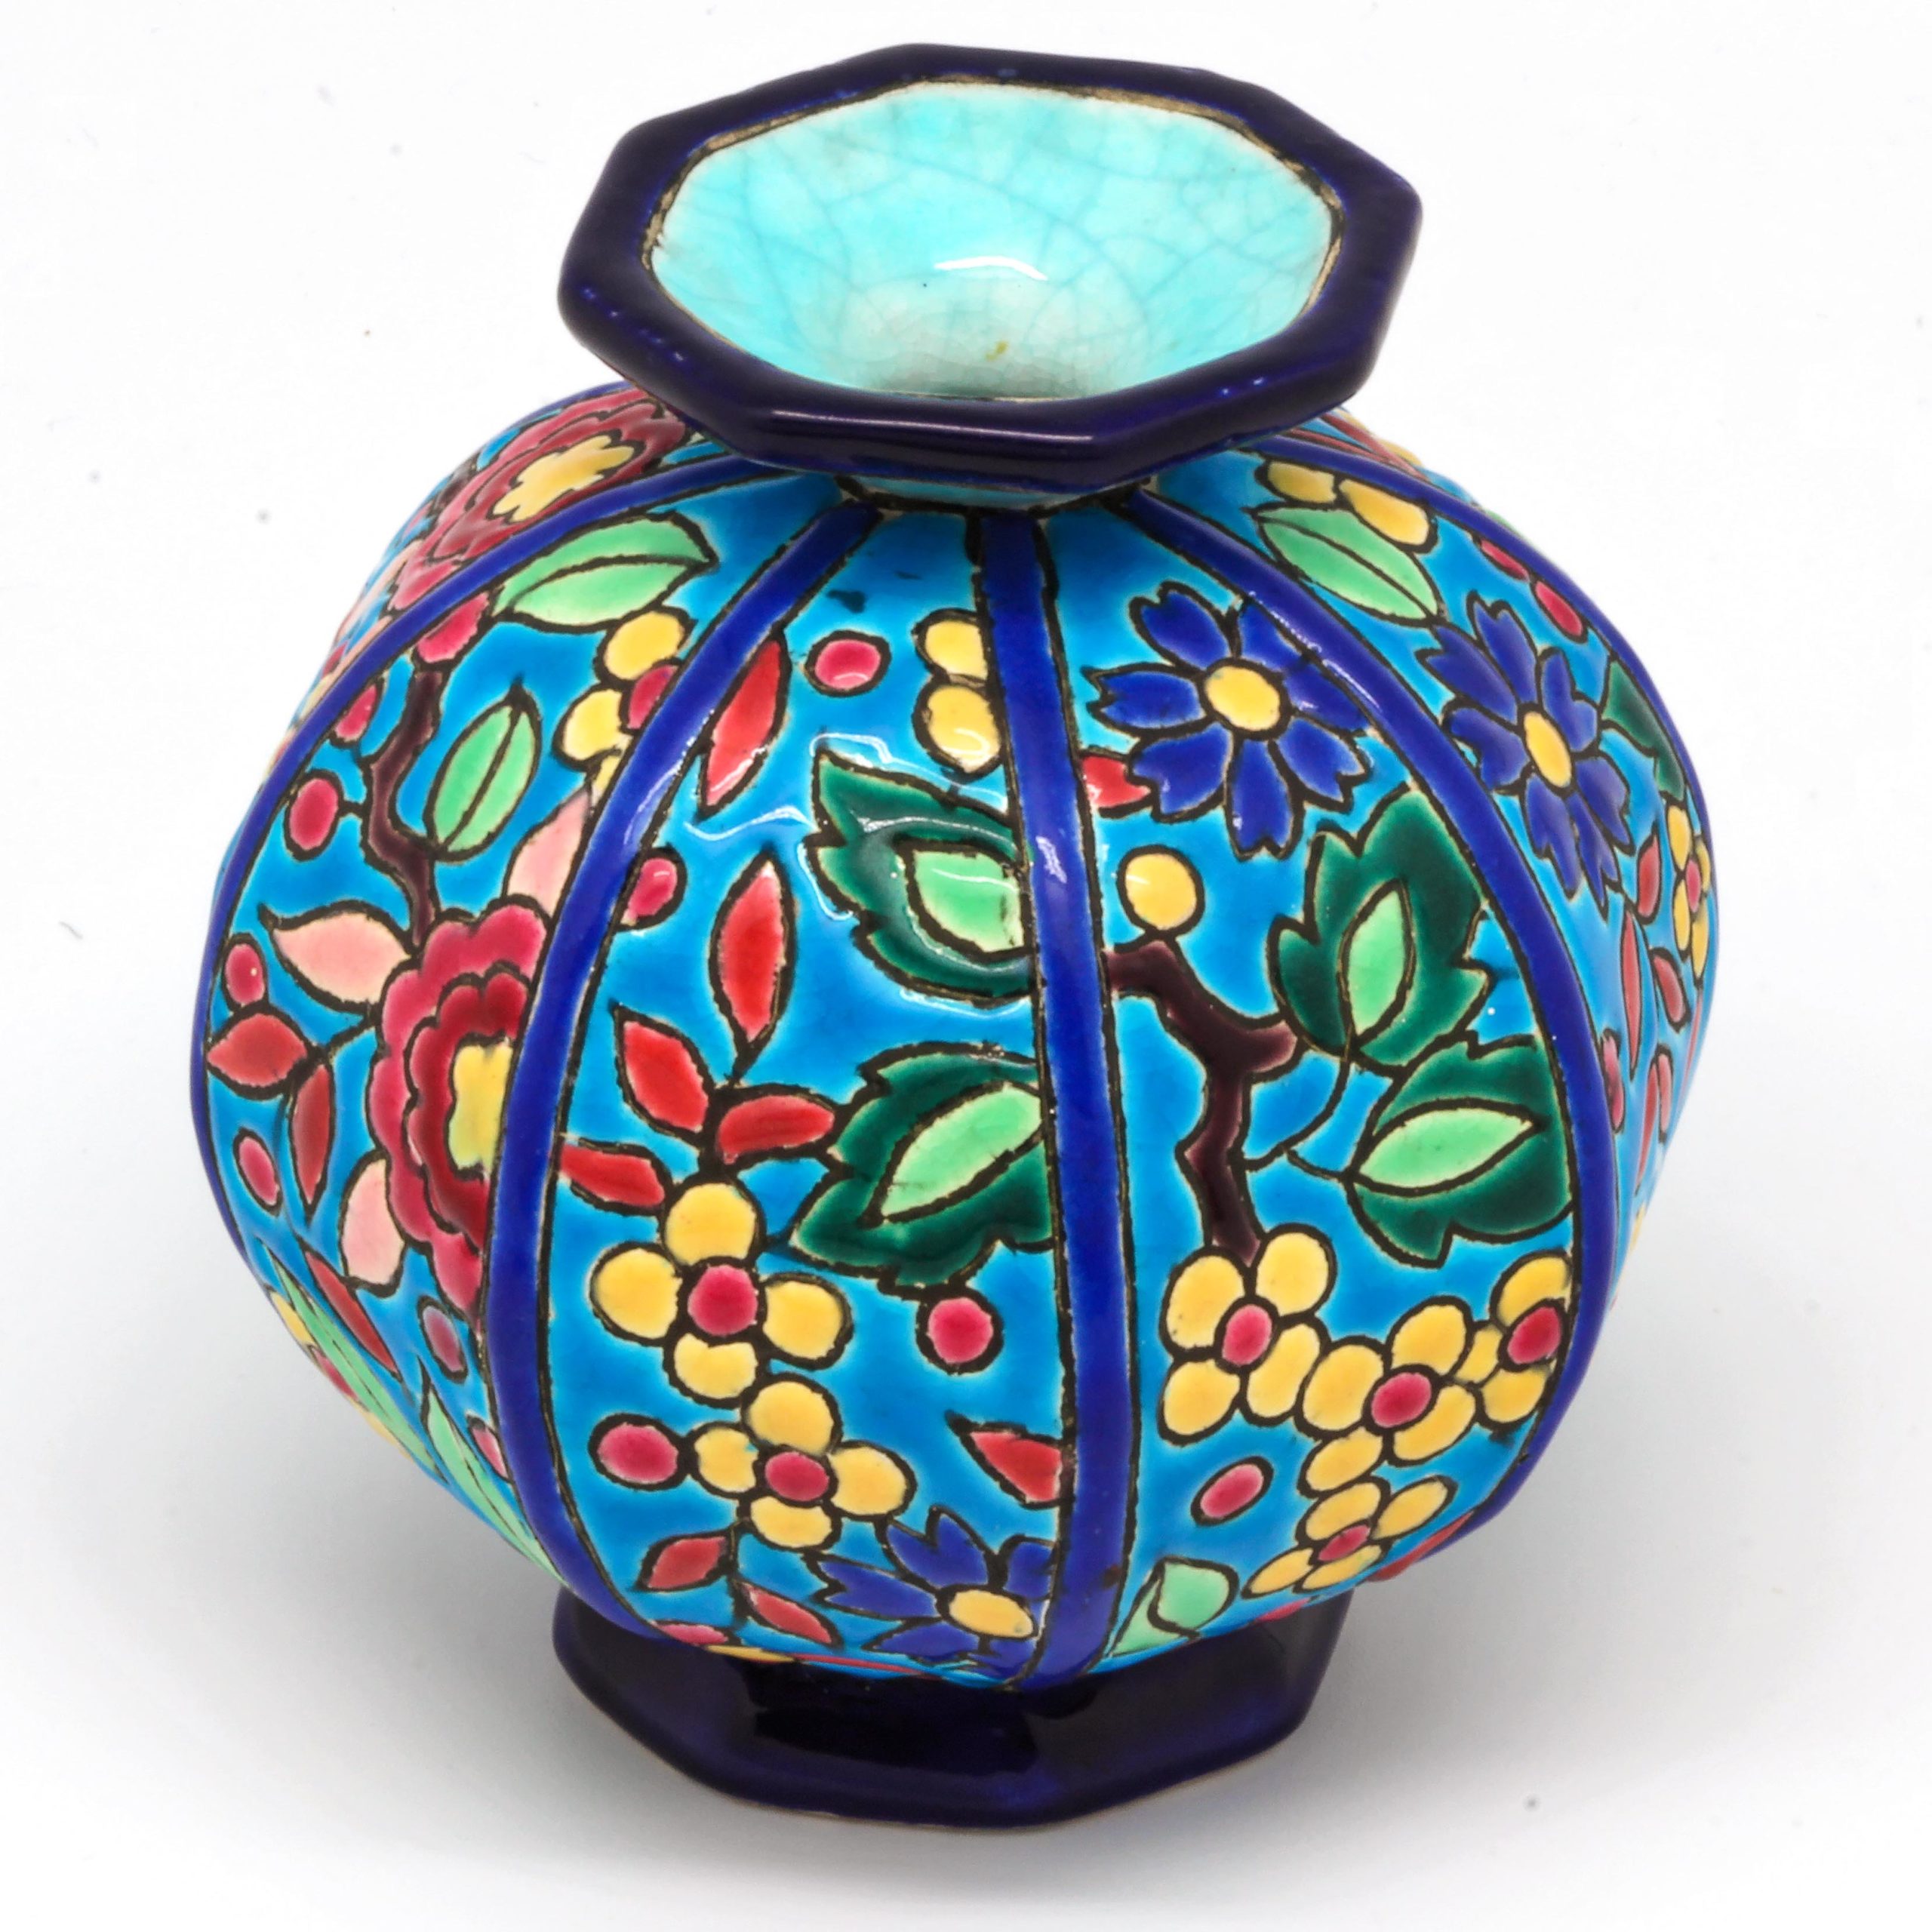 Vase soliflore décoré d'émaux de Longwy © Coyau - licence [CC BY-SA 3.0] from Wikimedia Commons